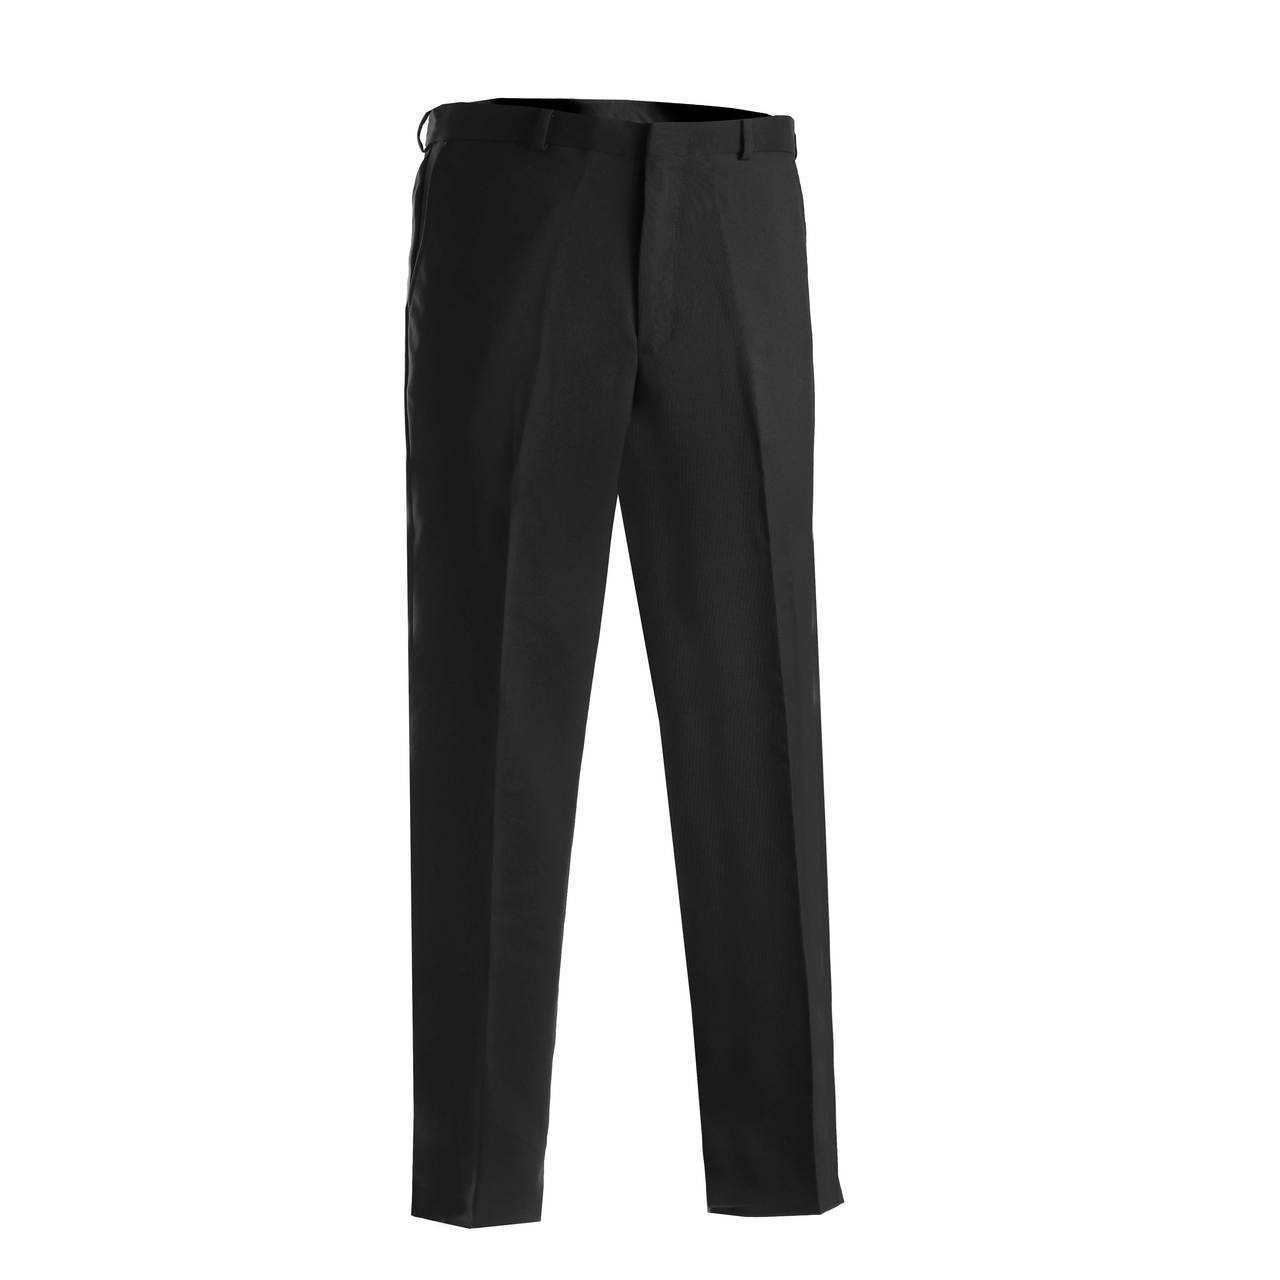 Zara Men's Suit Trousers W 42 in Cream 100% Cotton